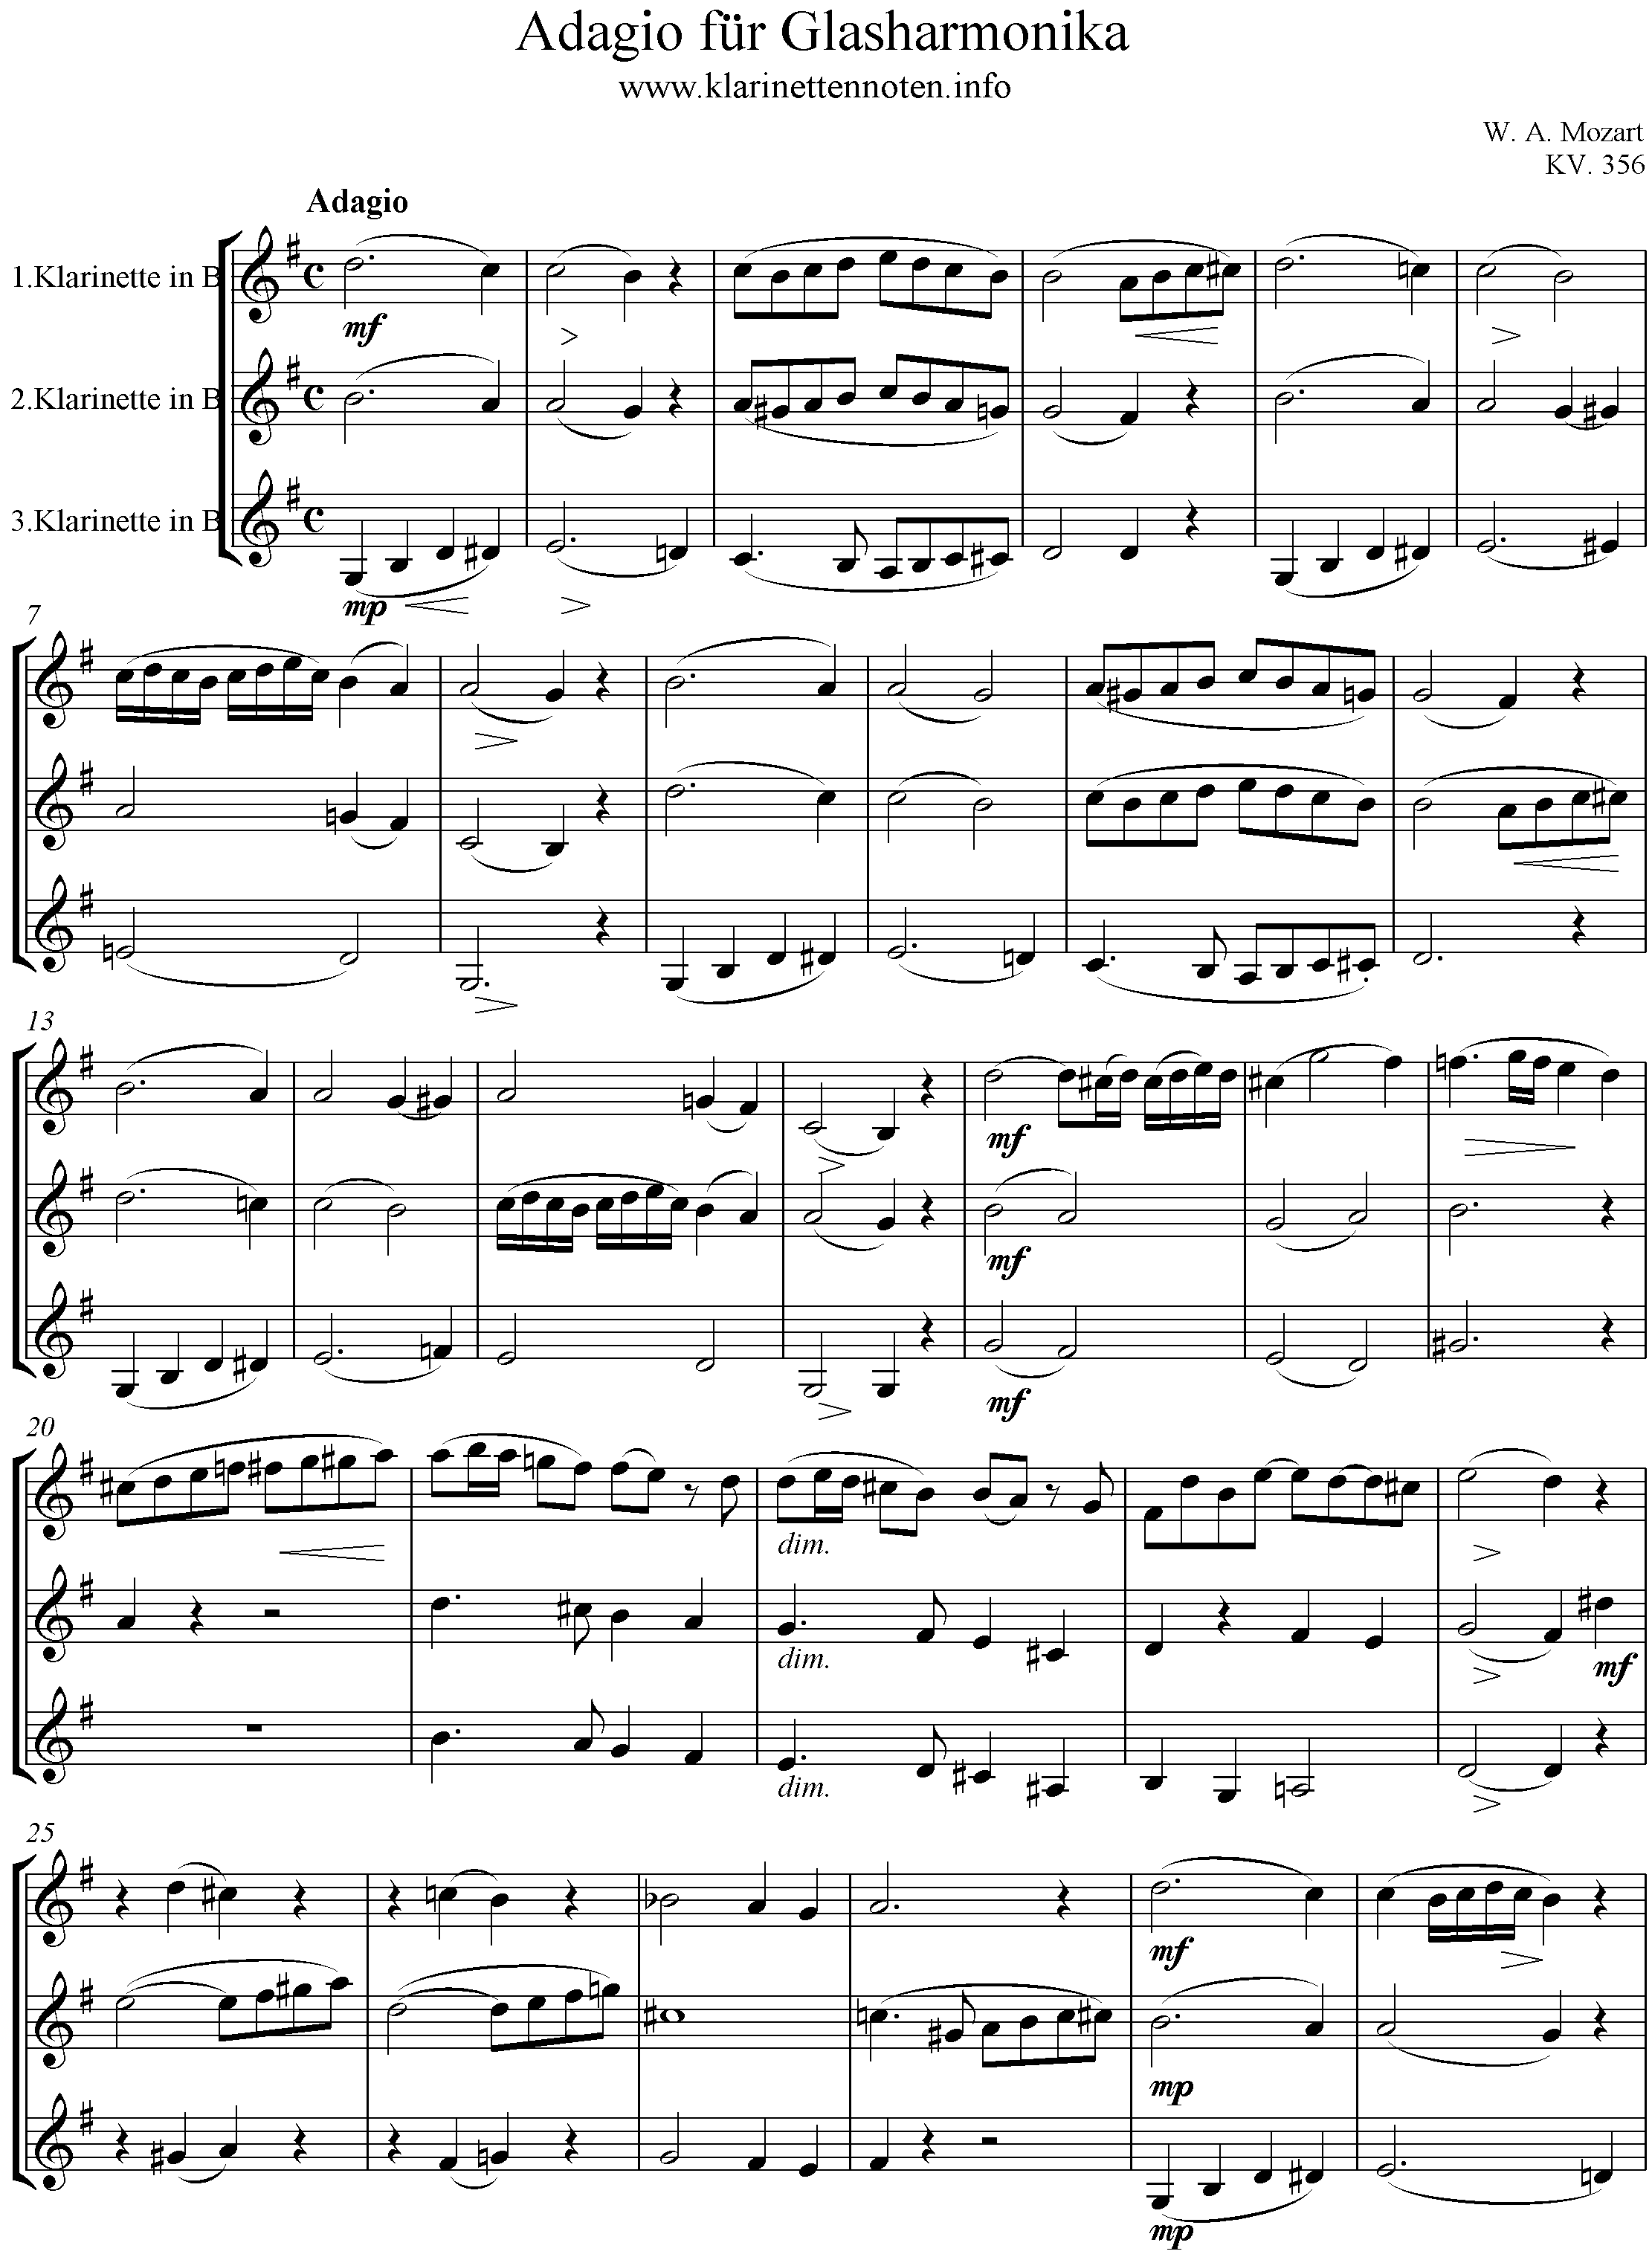 Clarinet Trio, Adagio für Glasharmonika, KV 356